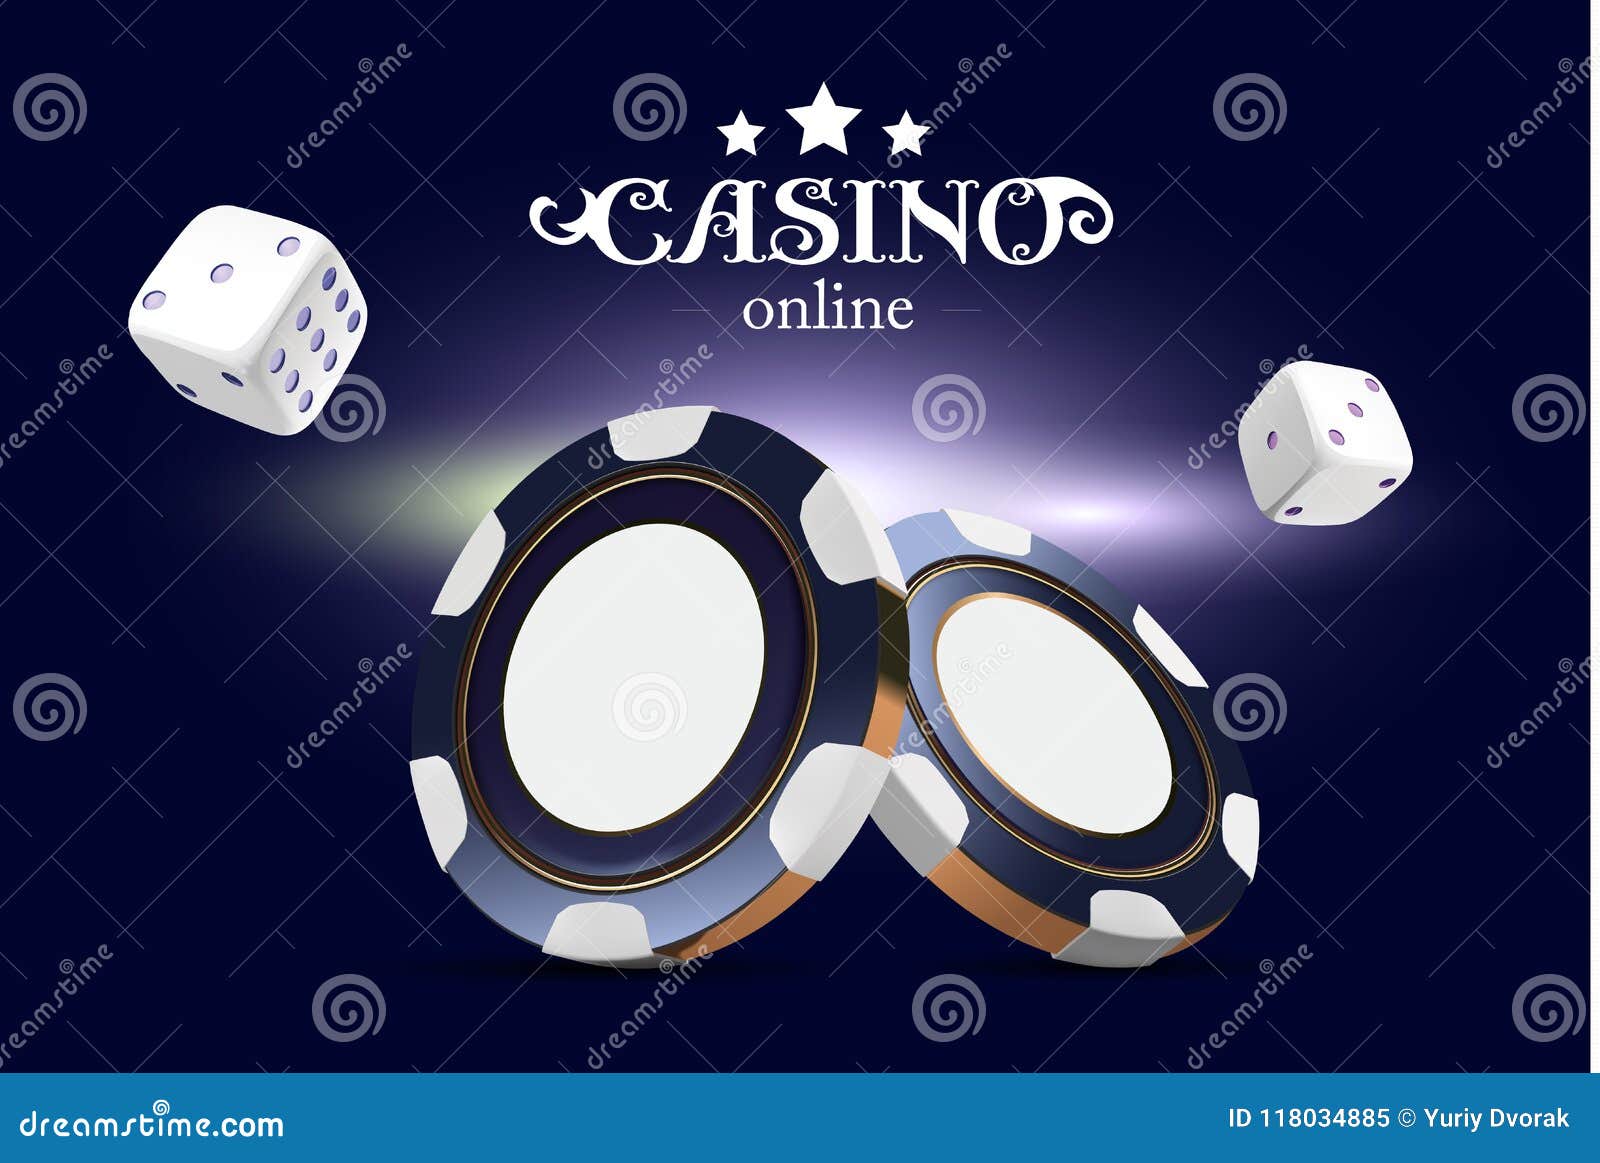 Dice Games Online Casino